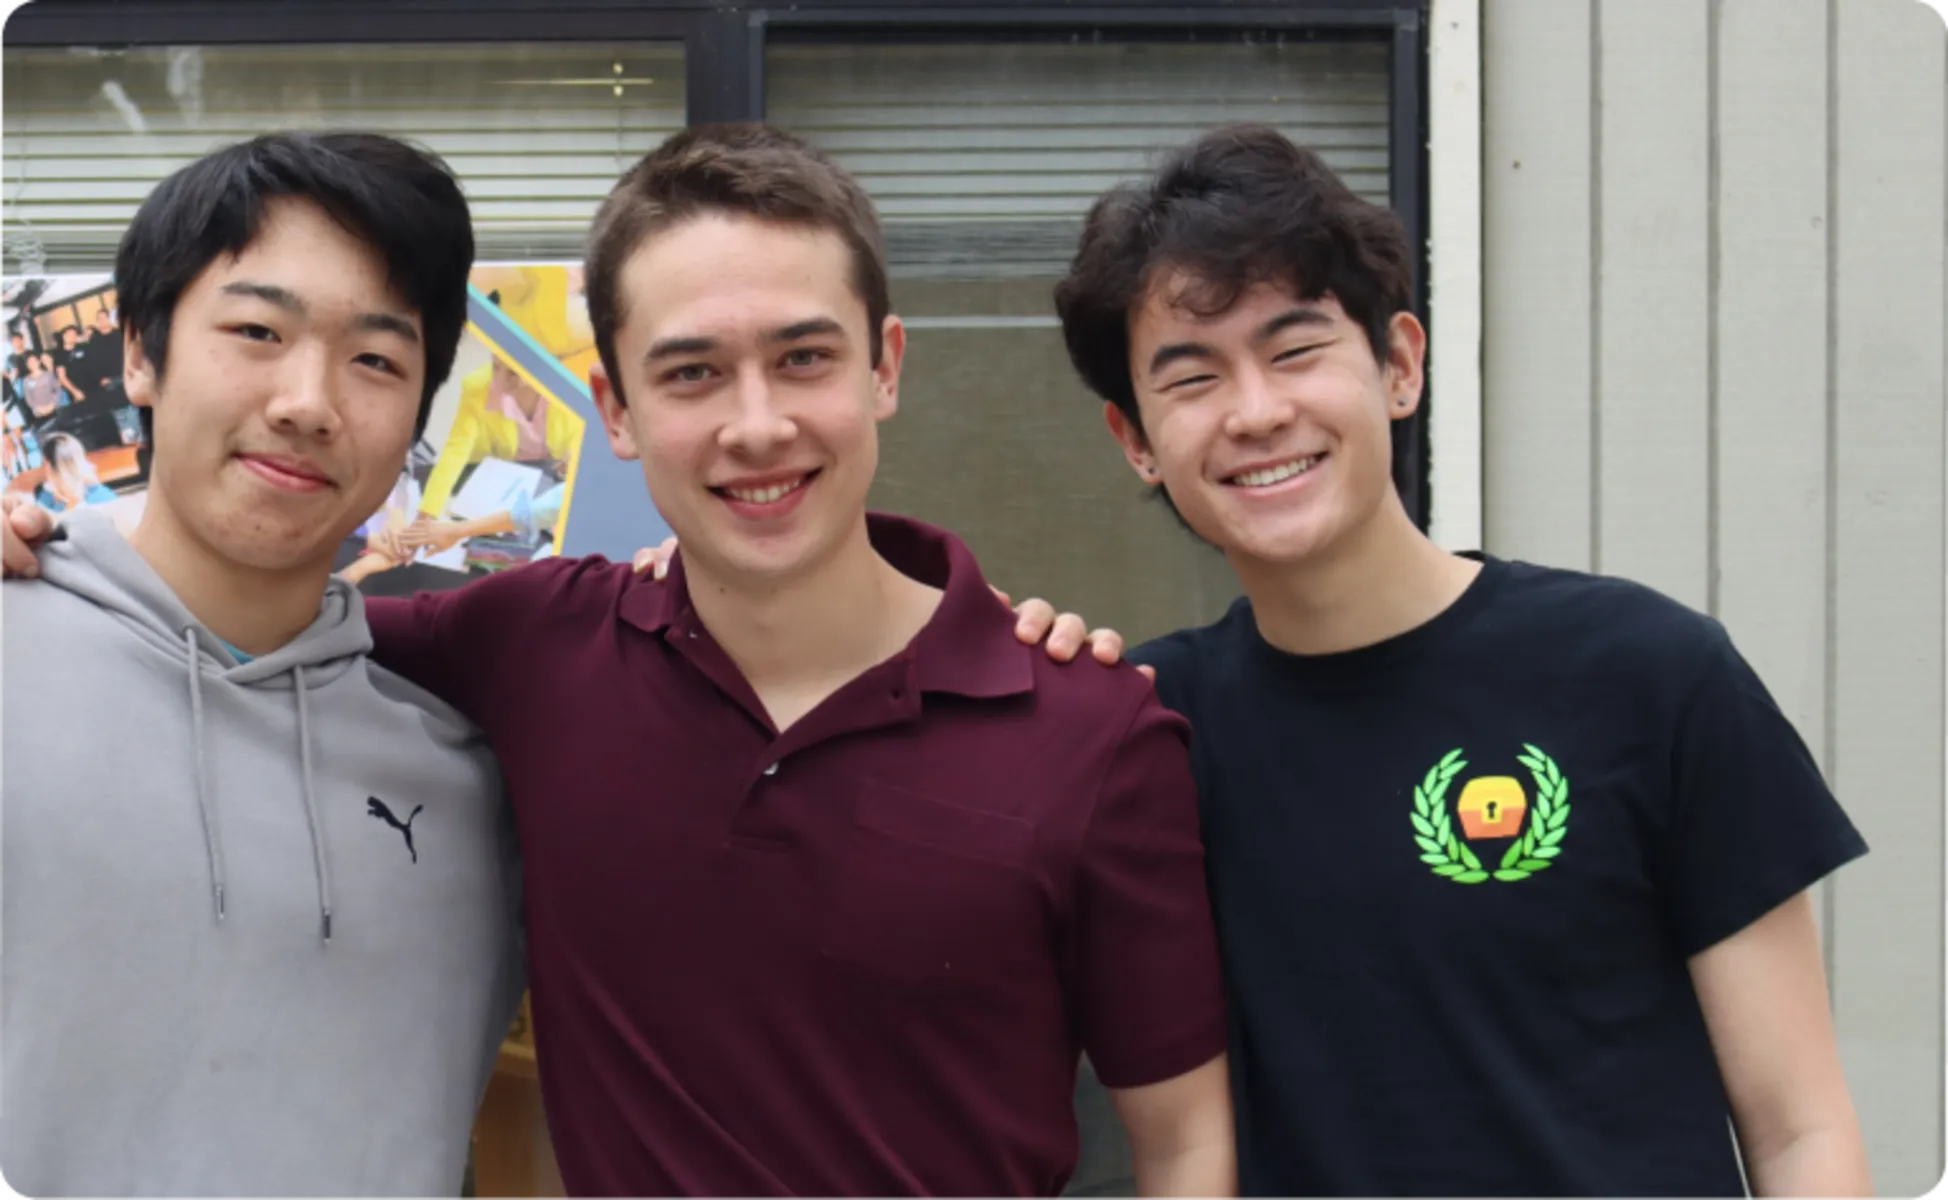 Ethan Xie, Ethan Kosaki, and Brandon Joe before the event